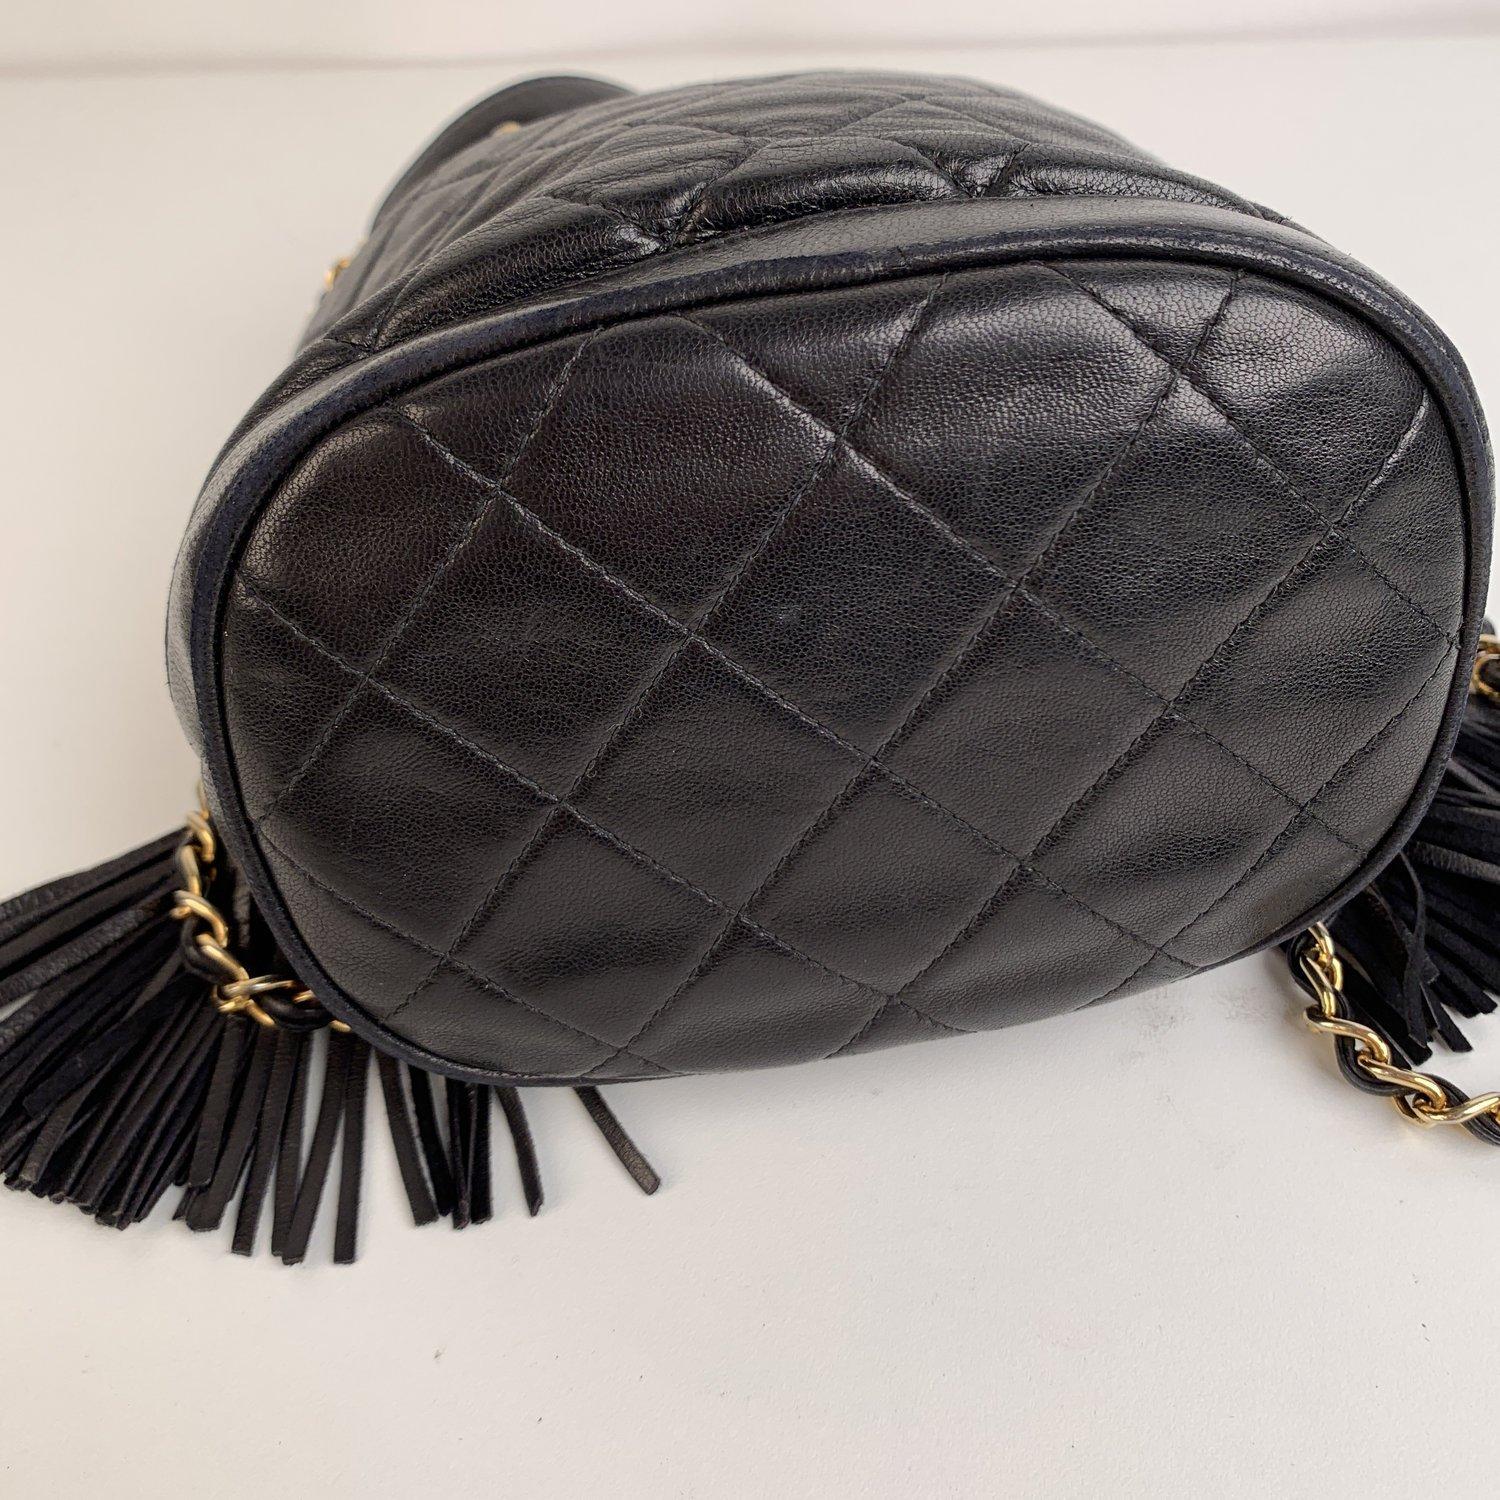 Chanel Vintage 1989 Black Quilted Leather Small Bucket Shoulder Bag 3